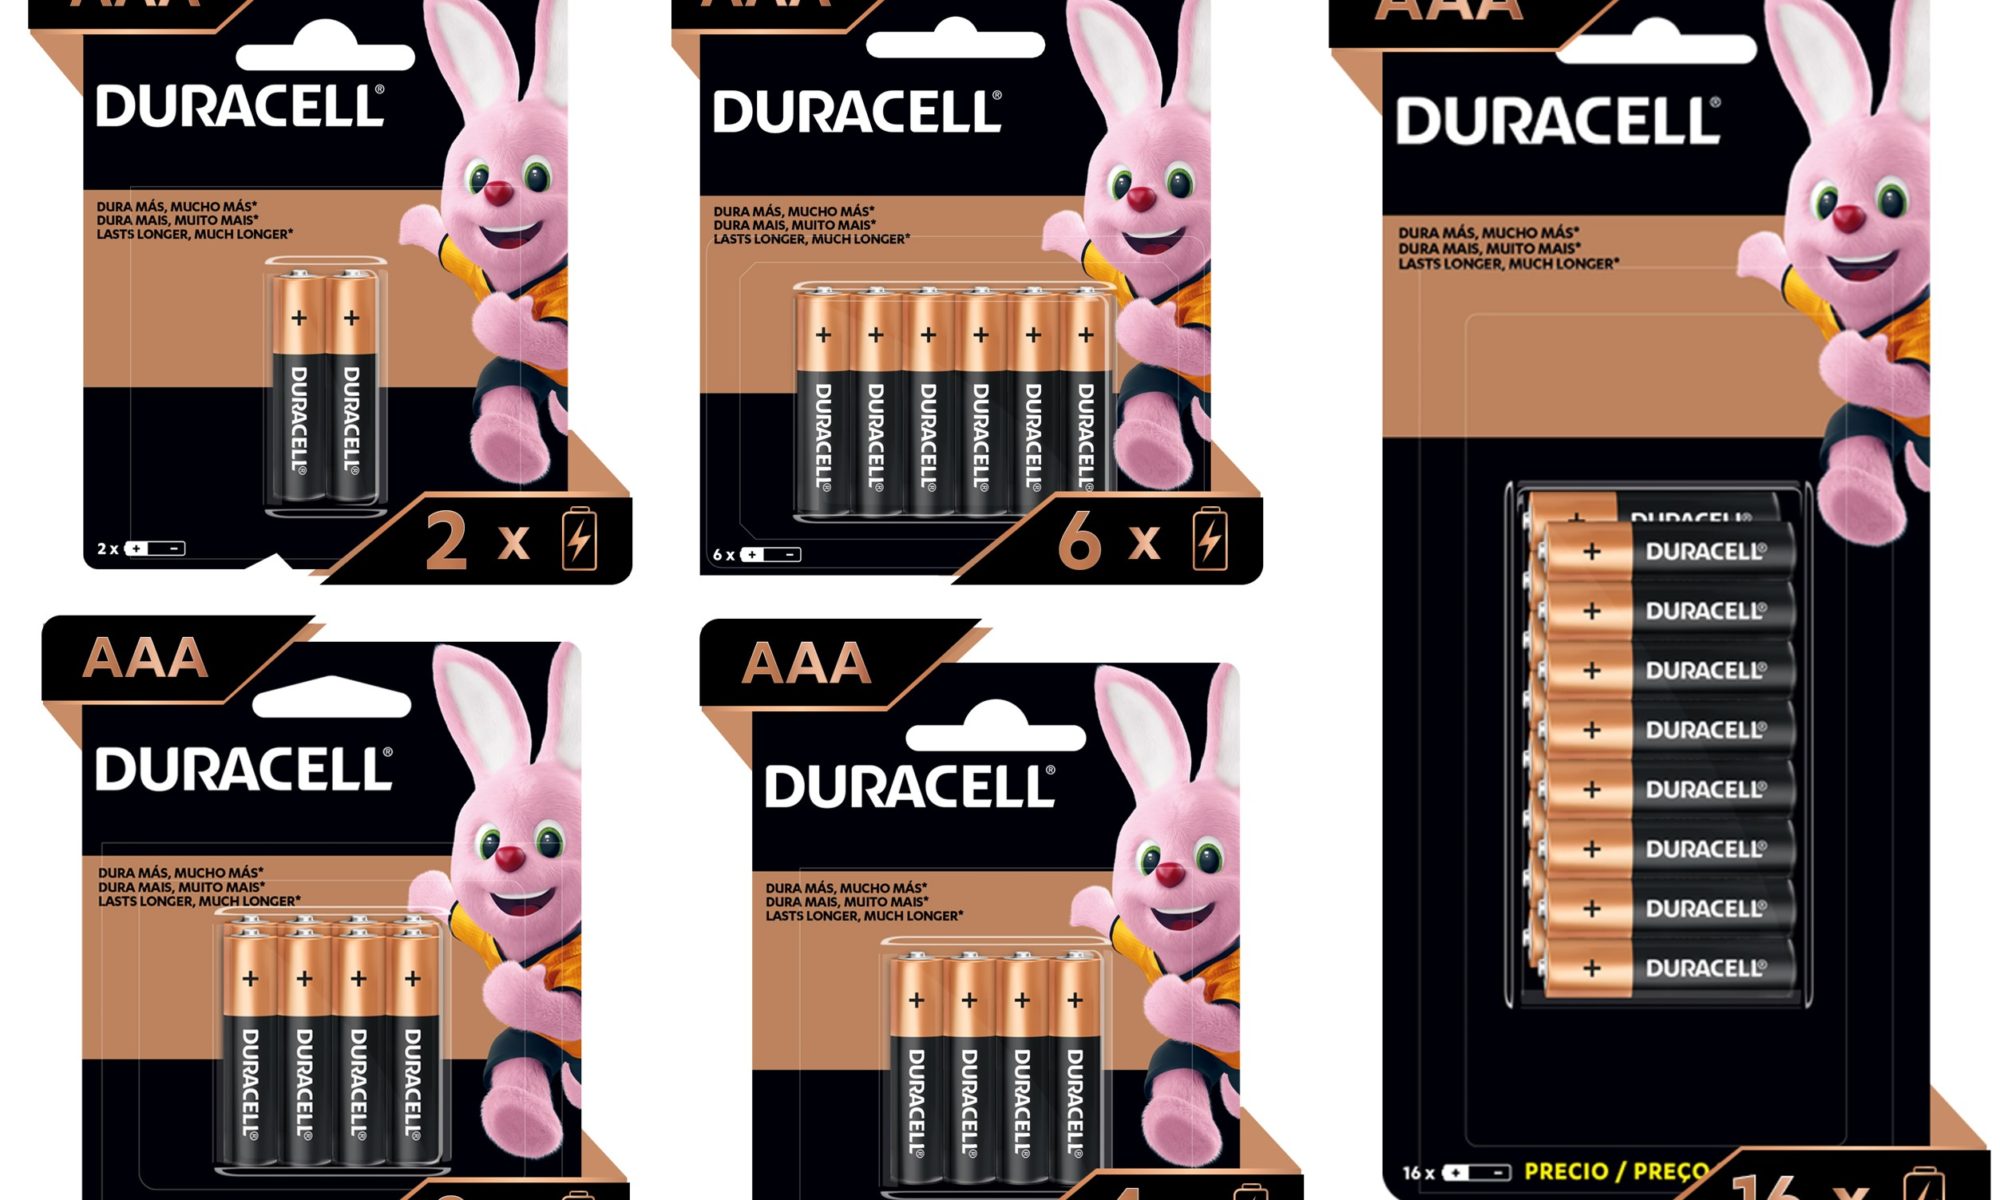 Pilas AAA (chica) Duracell, blister de 4 unidades